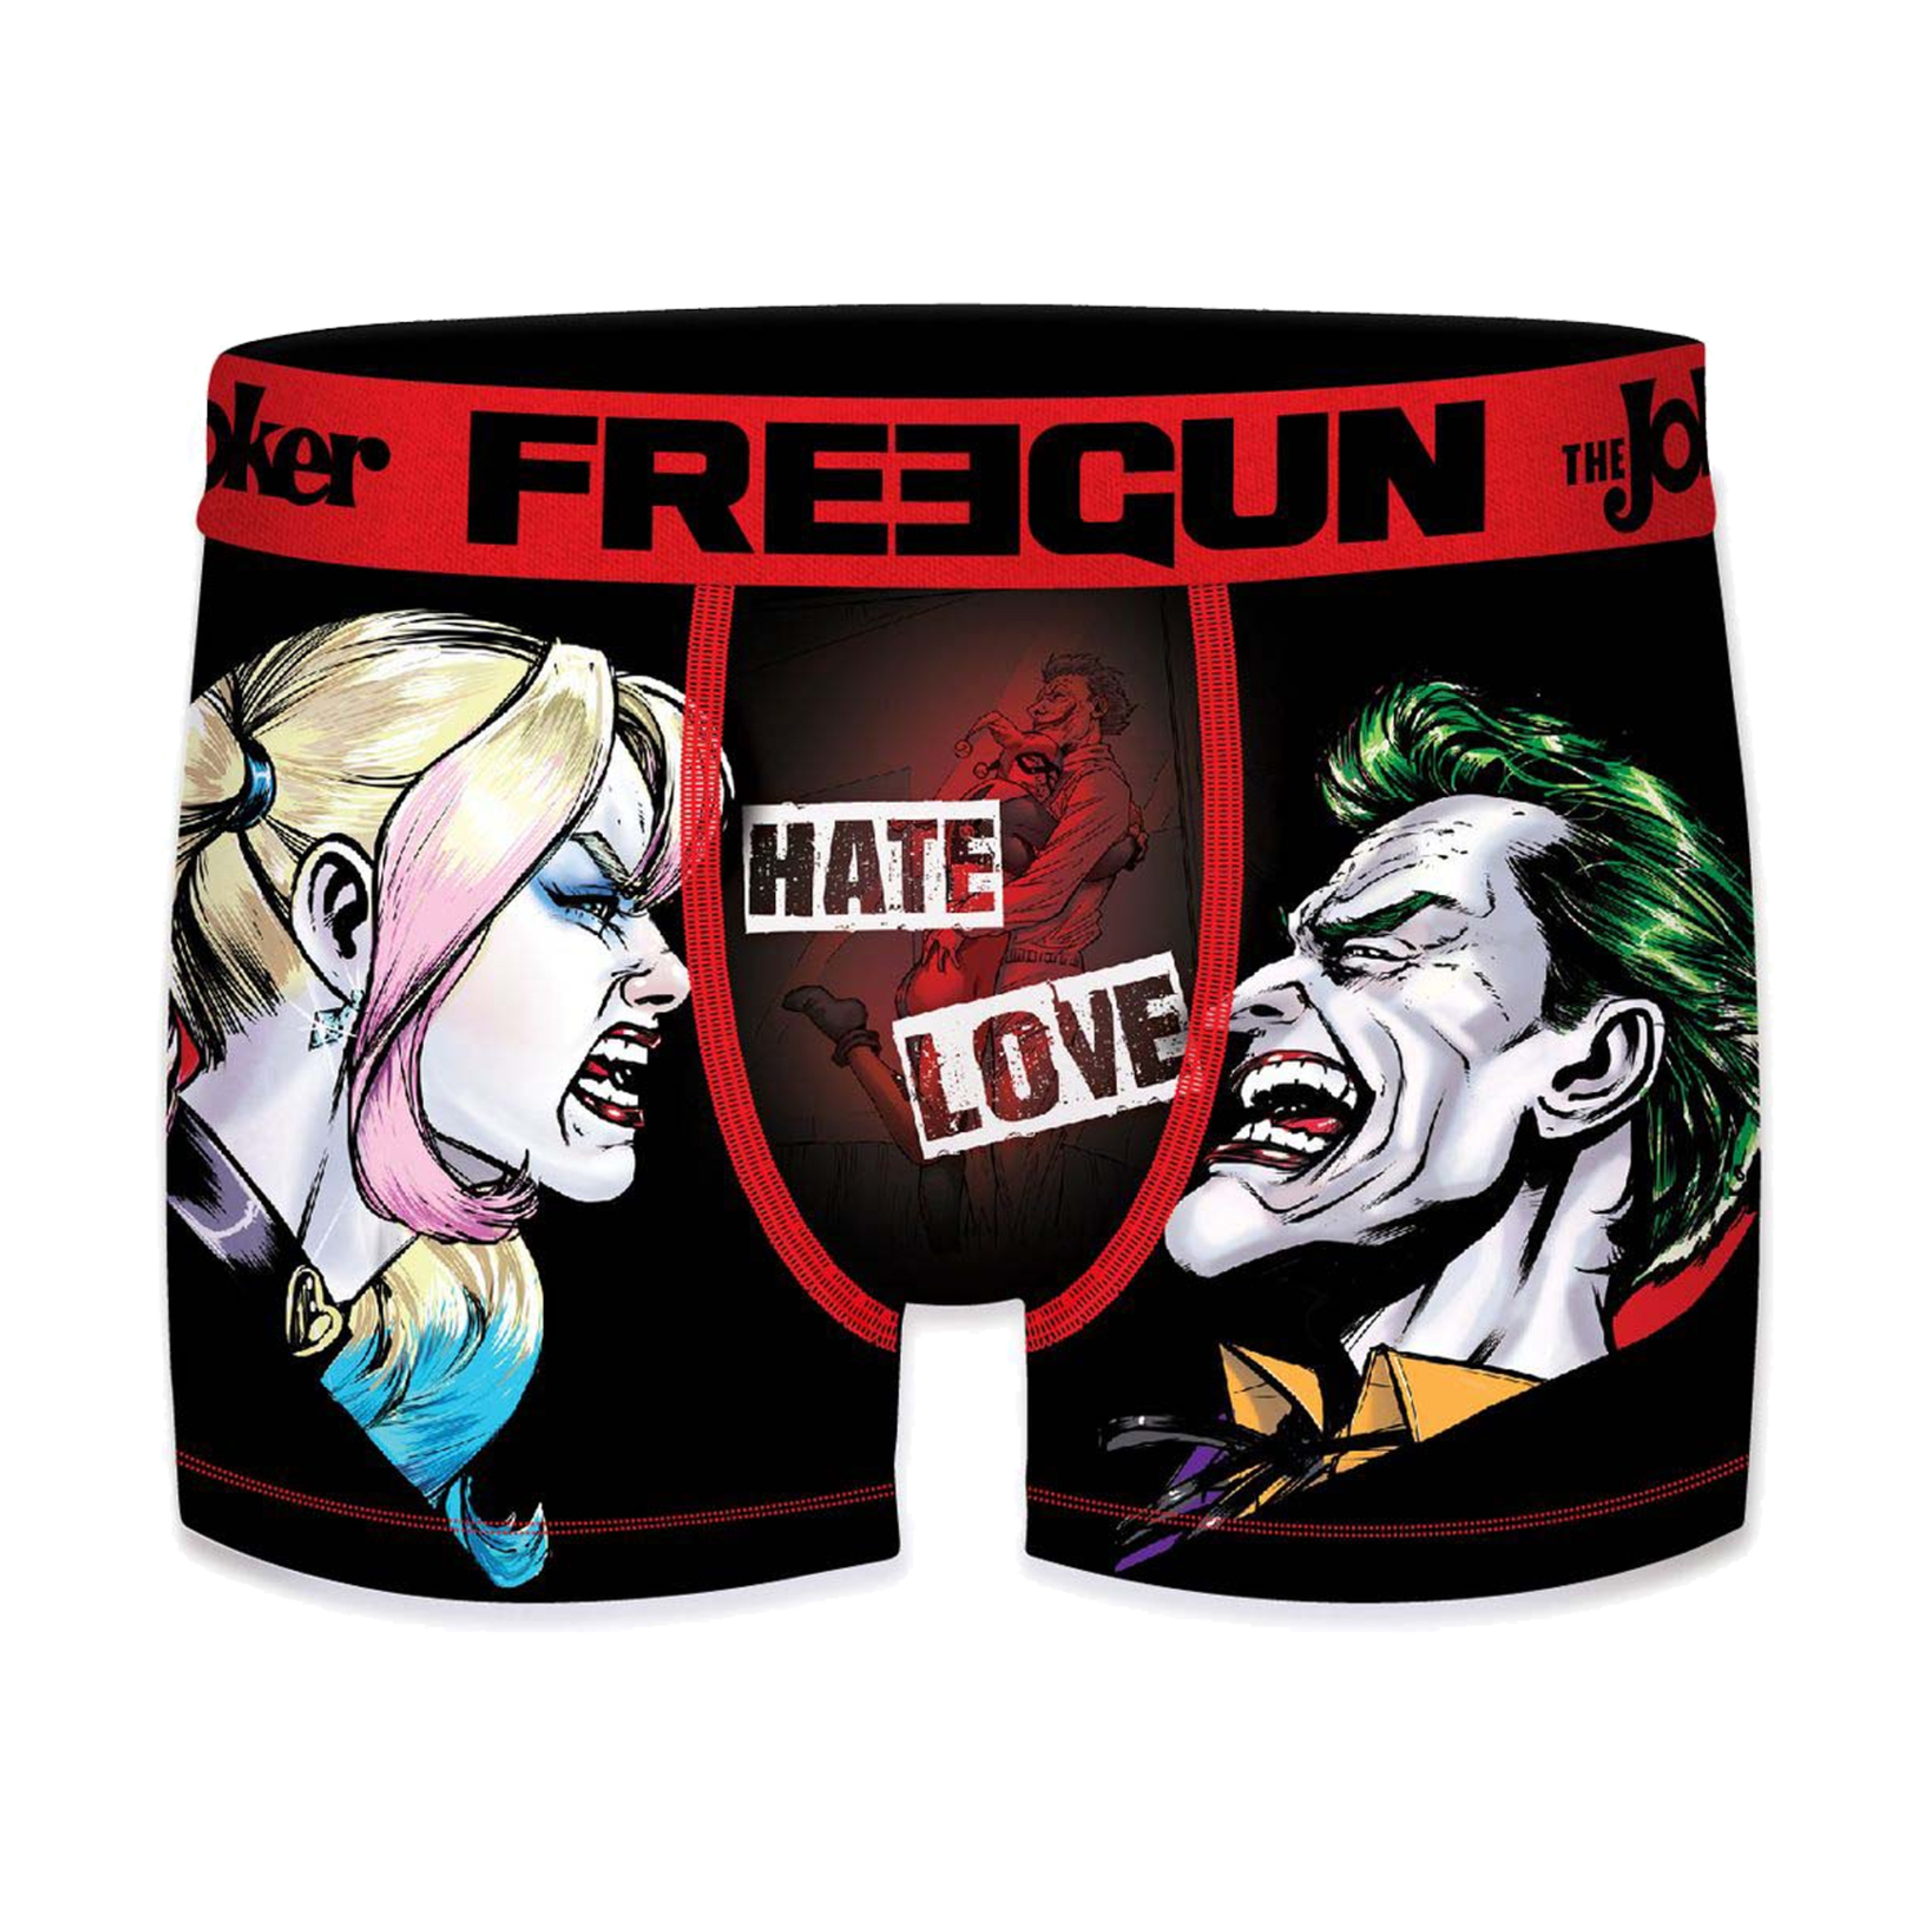 Calzoncillo Joker Y Harley Quinn Freegun Para Niño - Multicolor  MKP